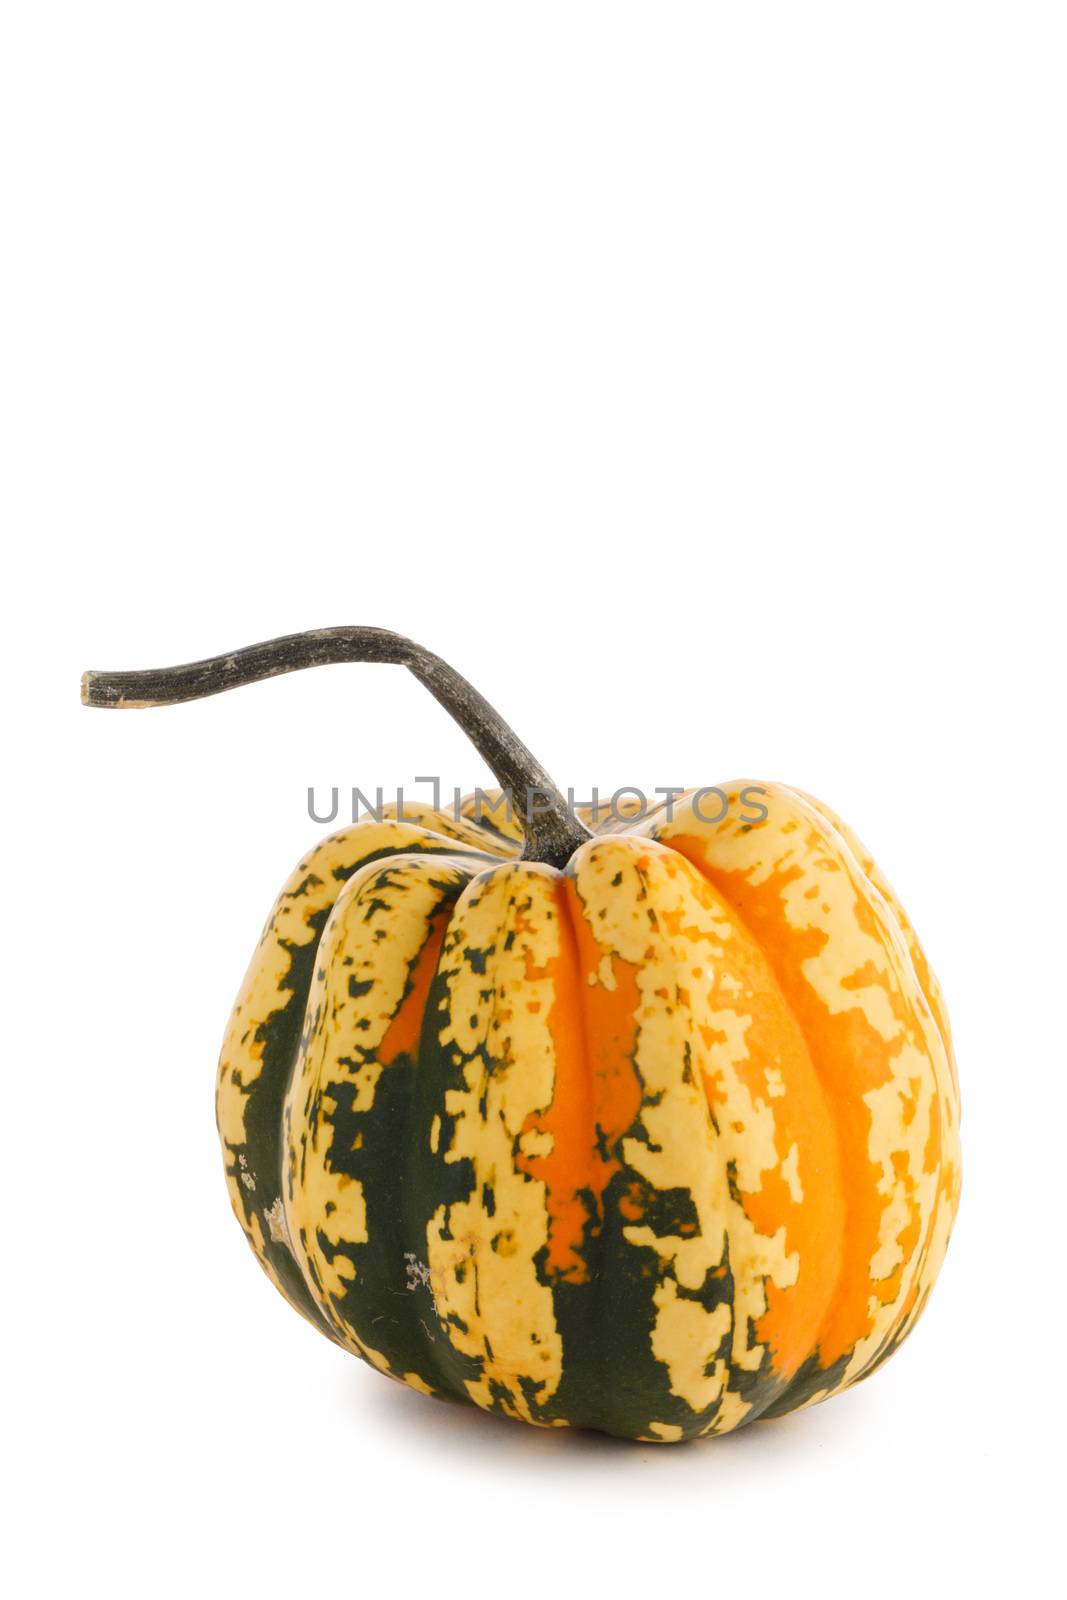 One striped pumpkin by Yellowj